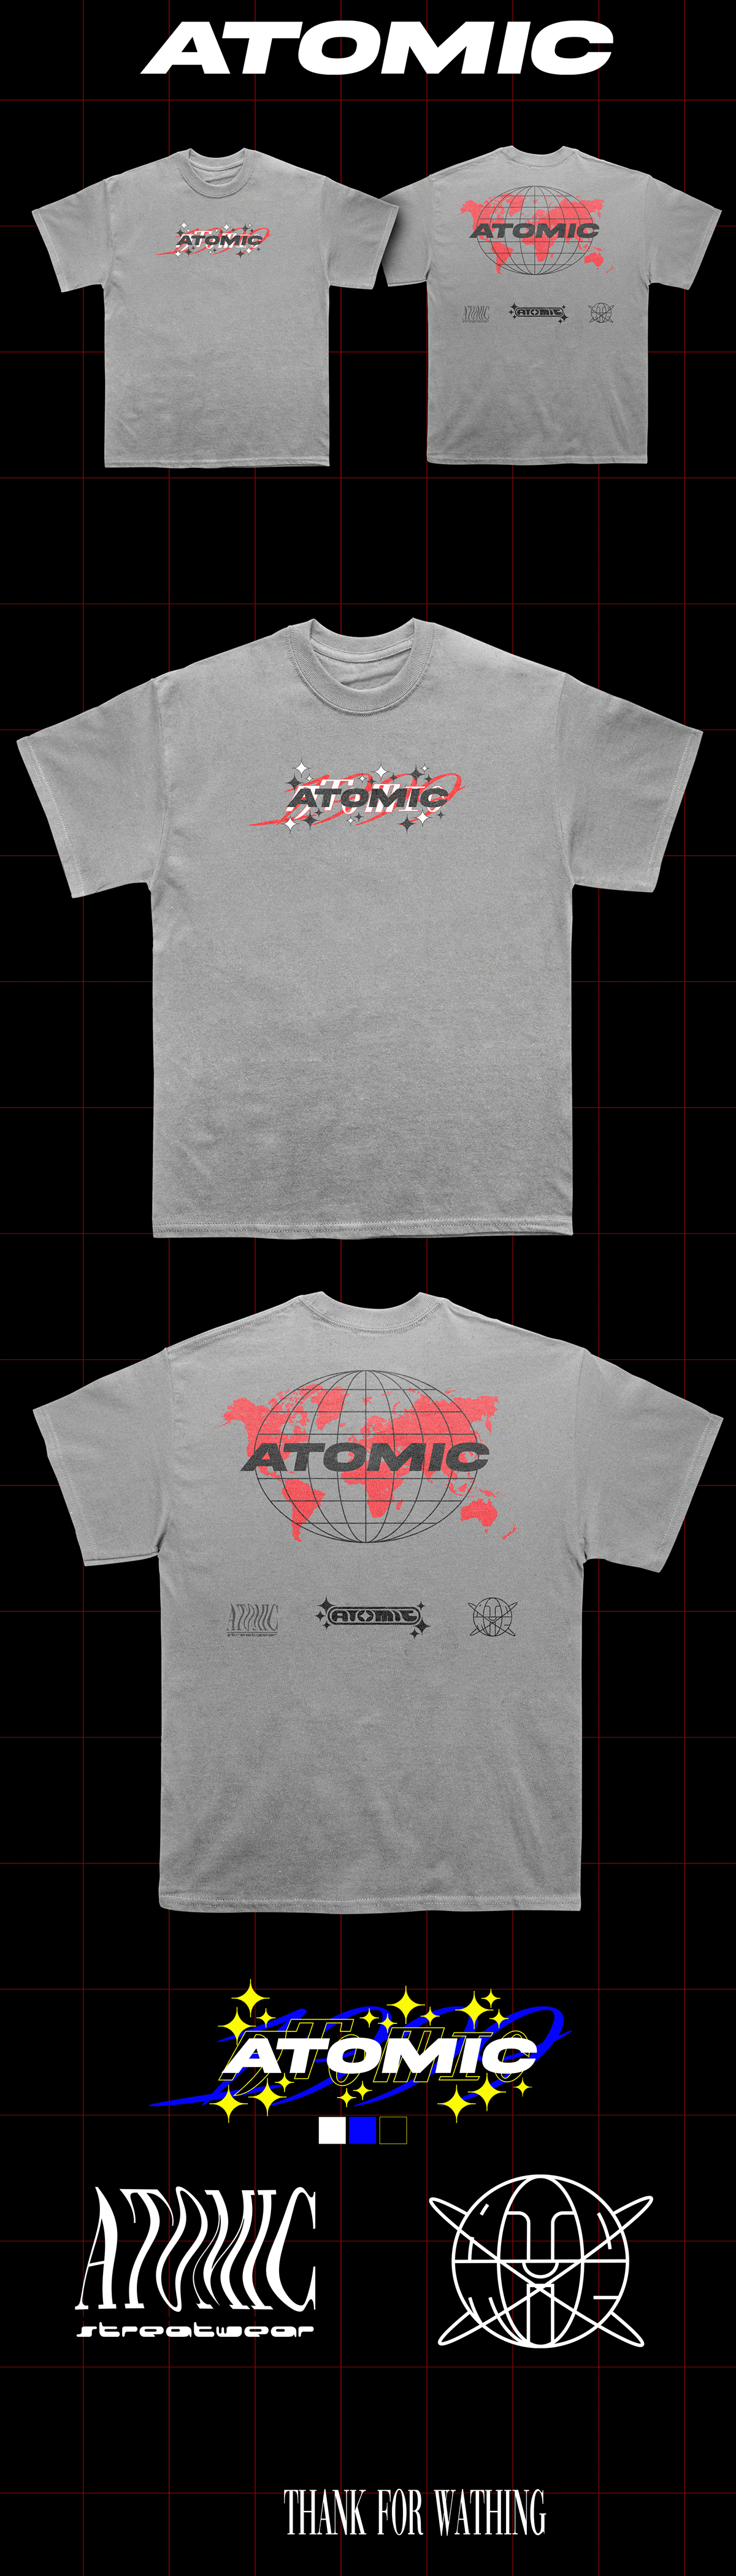 ATOMIC T-shirt Mockup 